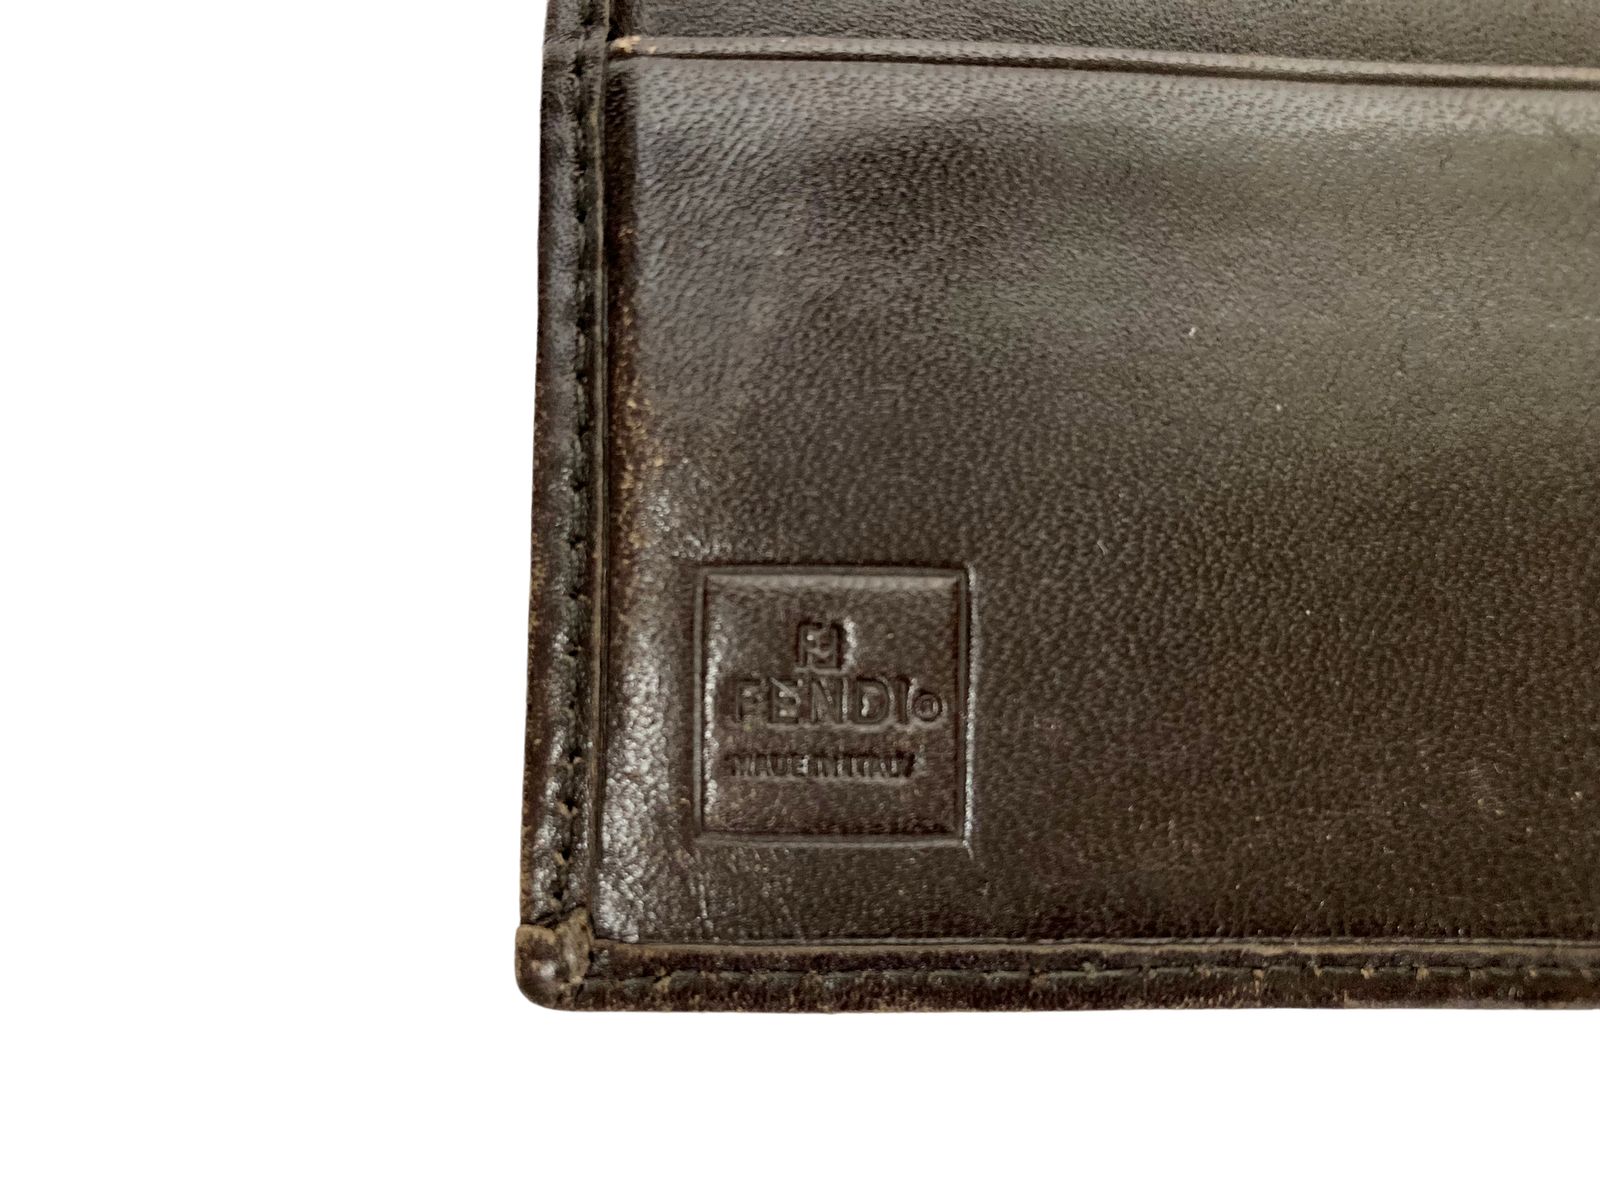 FENDI (フェンディ) イタリア製 二つ折り財布 ズッカ柄 キャンバス 